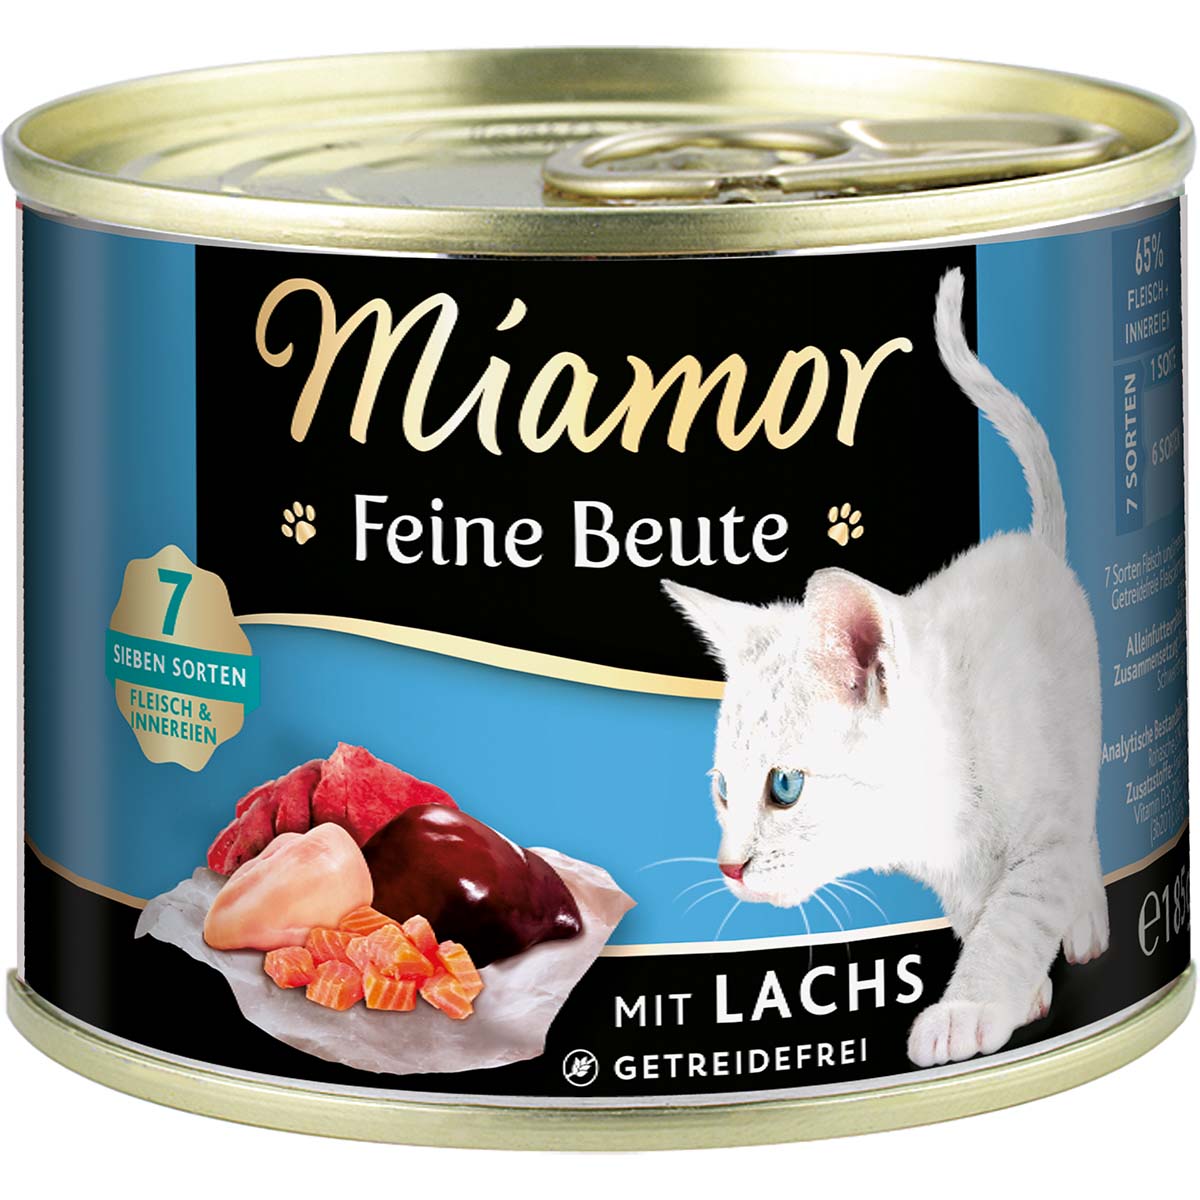 Miamor Feine Beute Lachs 24x185g von Miamor